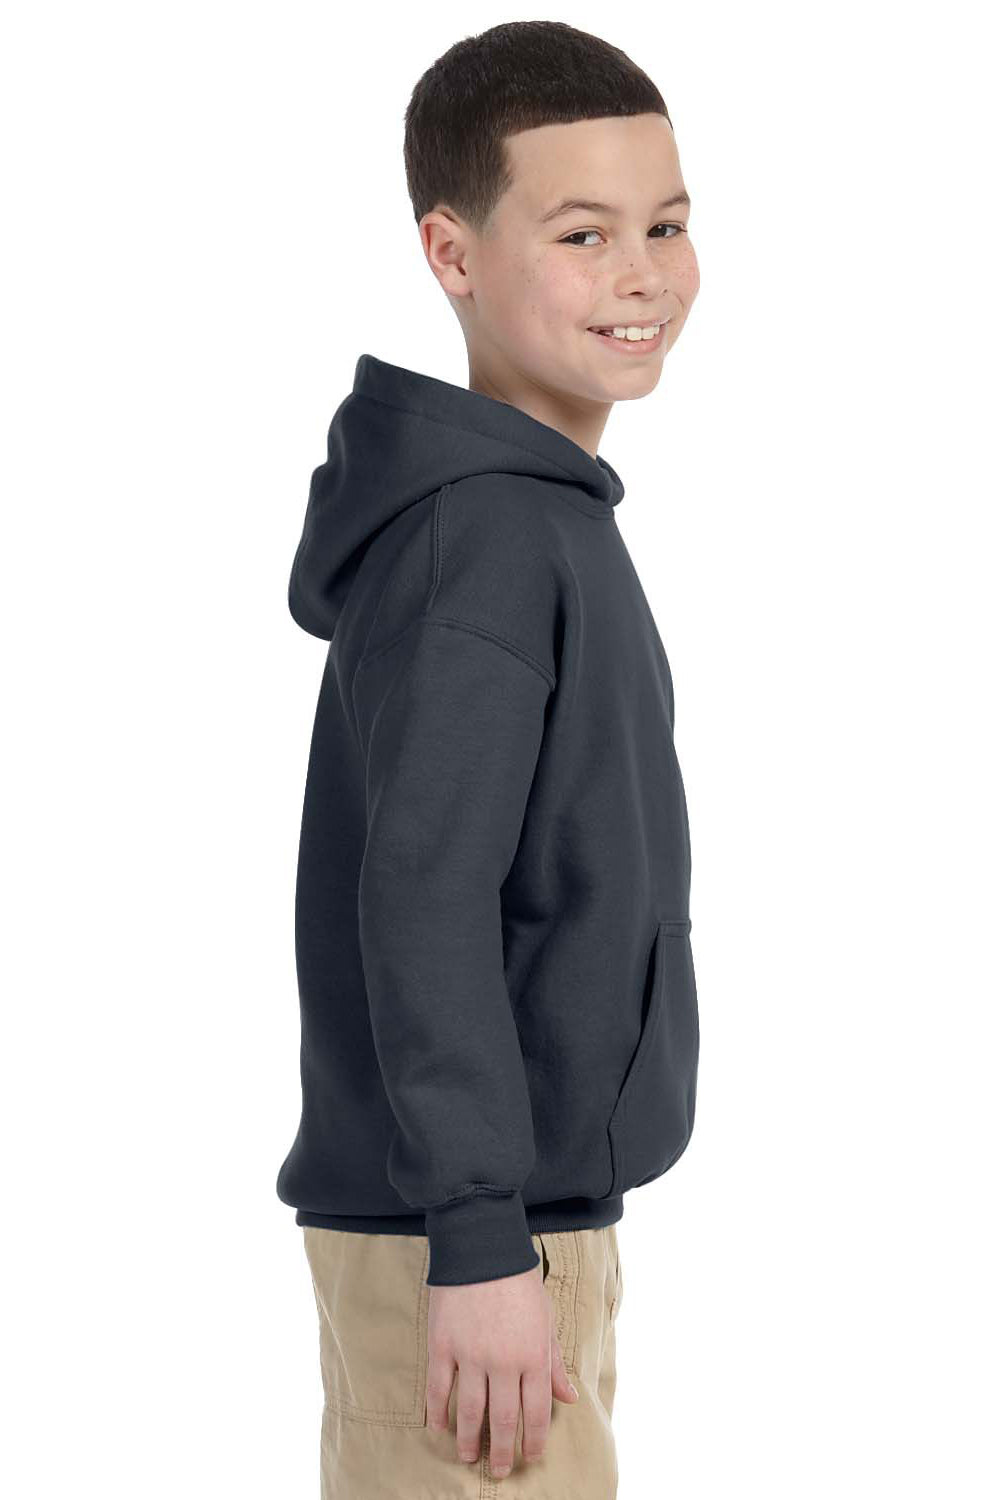 Gildan G185B Youth Hooded Sweatshirt Hoodie Charcoal Grey Side